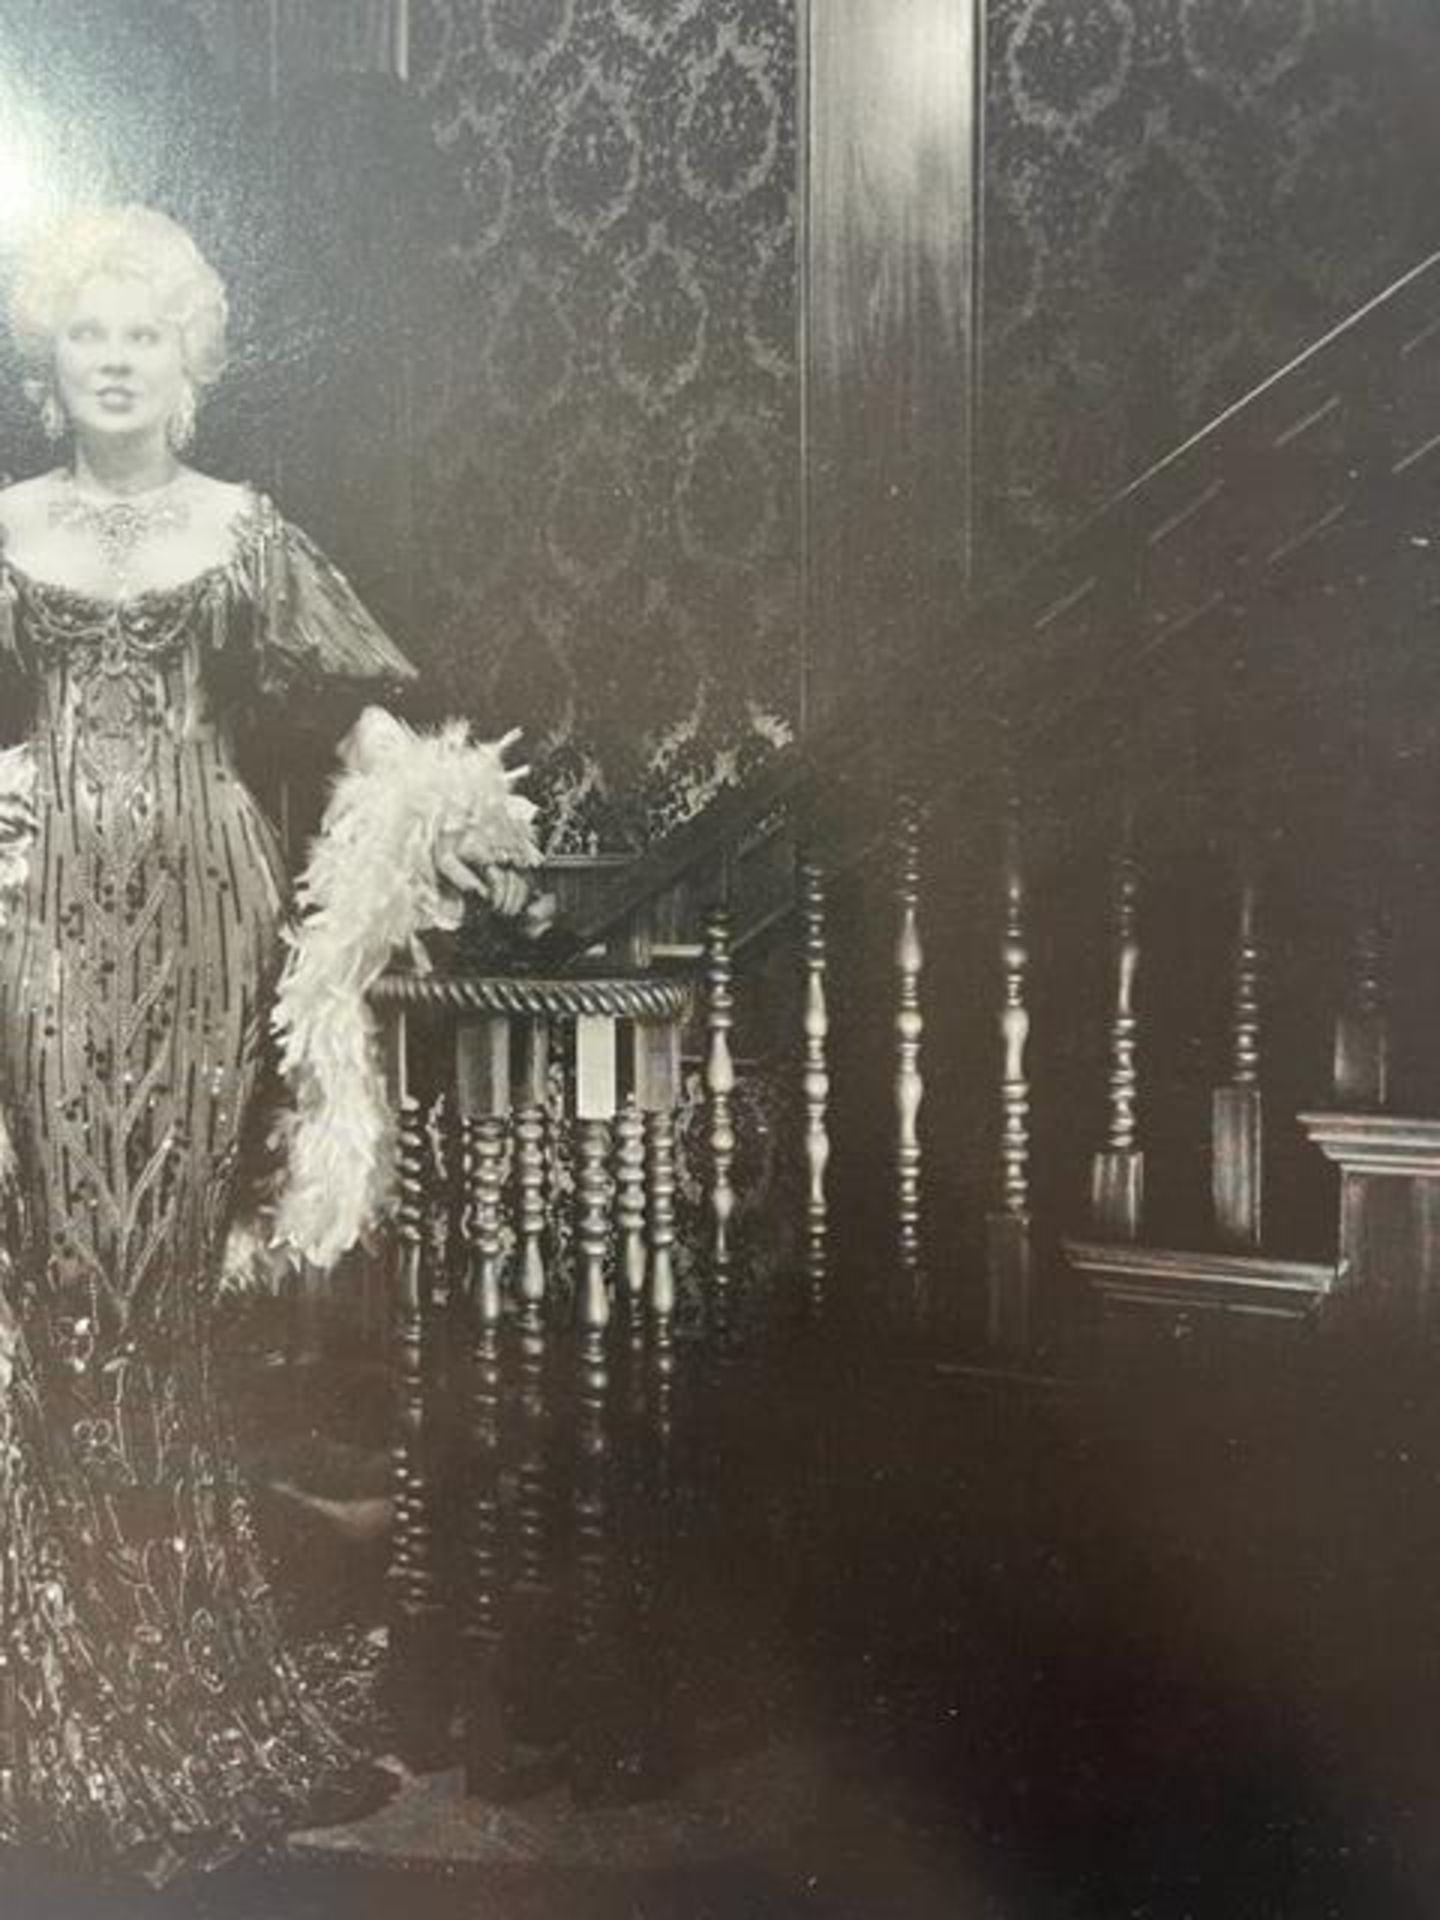 Hiroshi Sugimoto "Mae West" Print. - Image 2 of 6